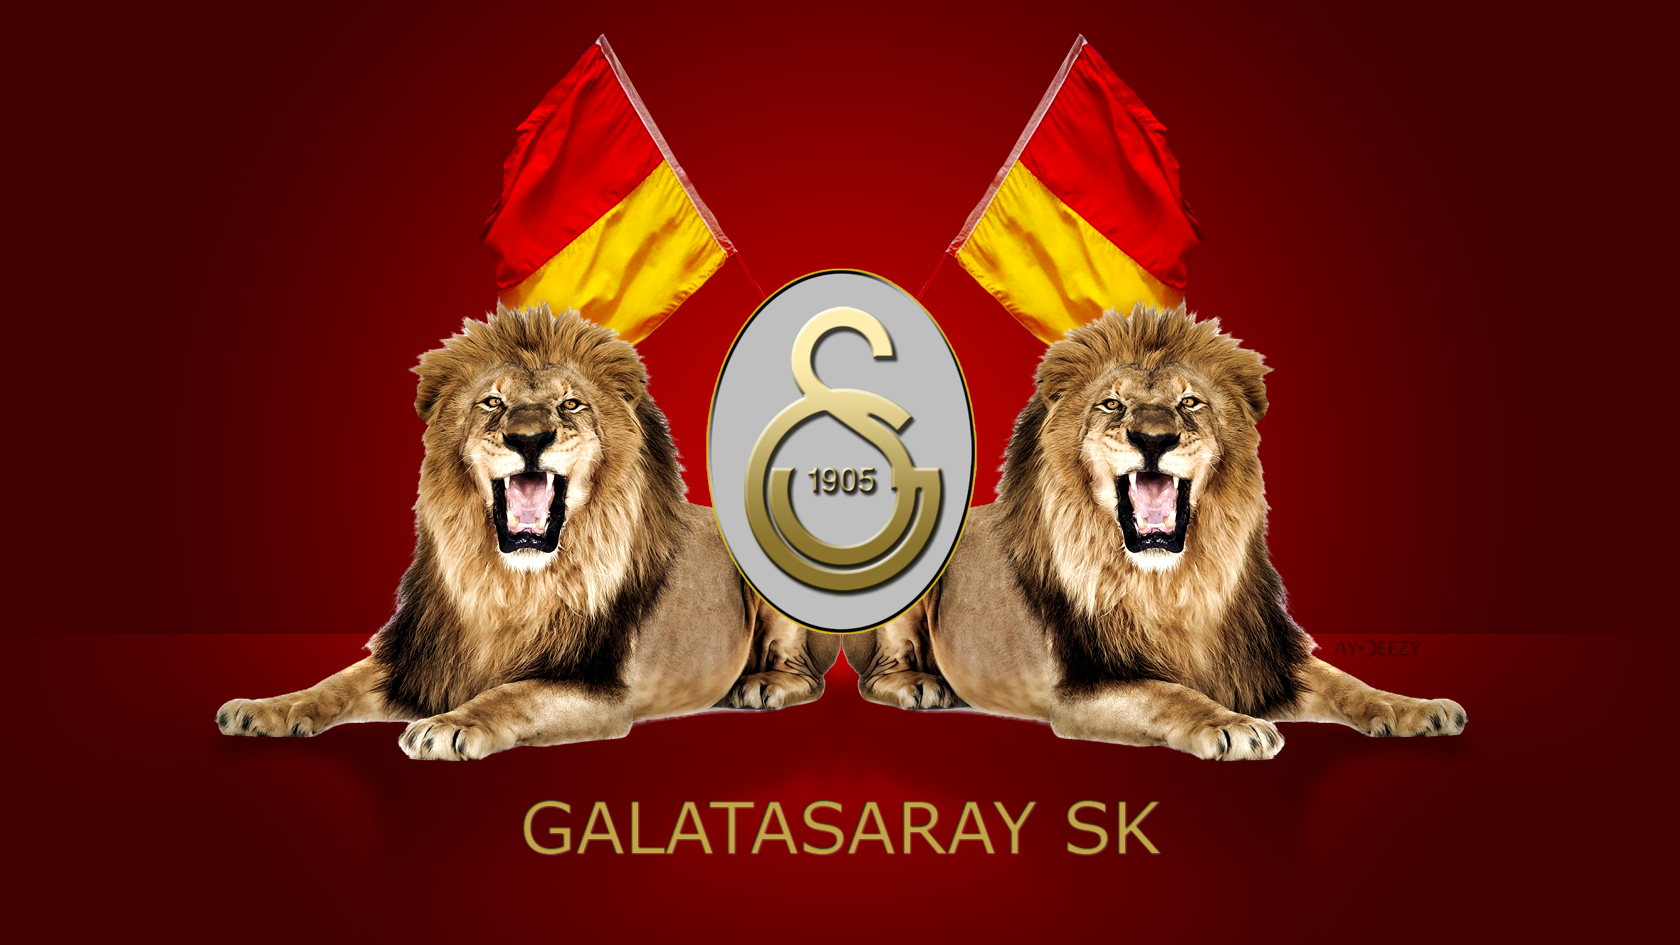 Galatasaray Wallpapers - HD Football Wallpapers